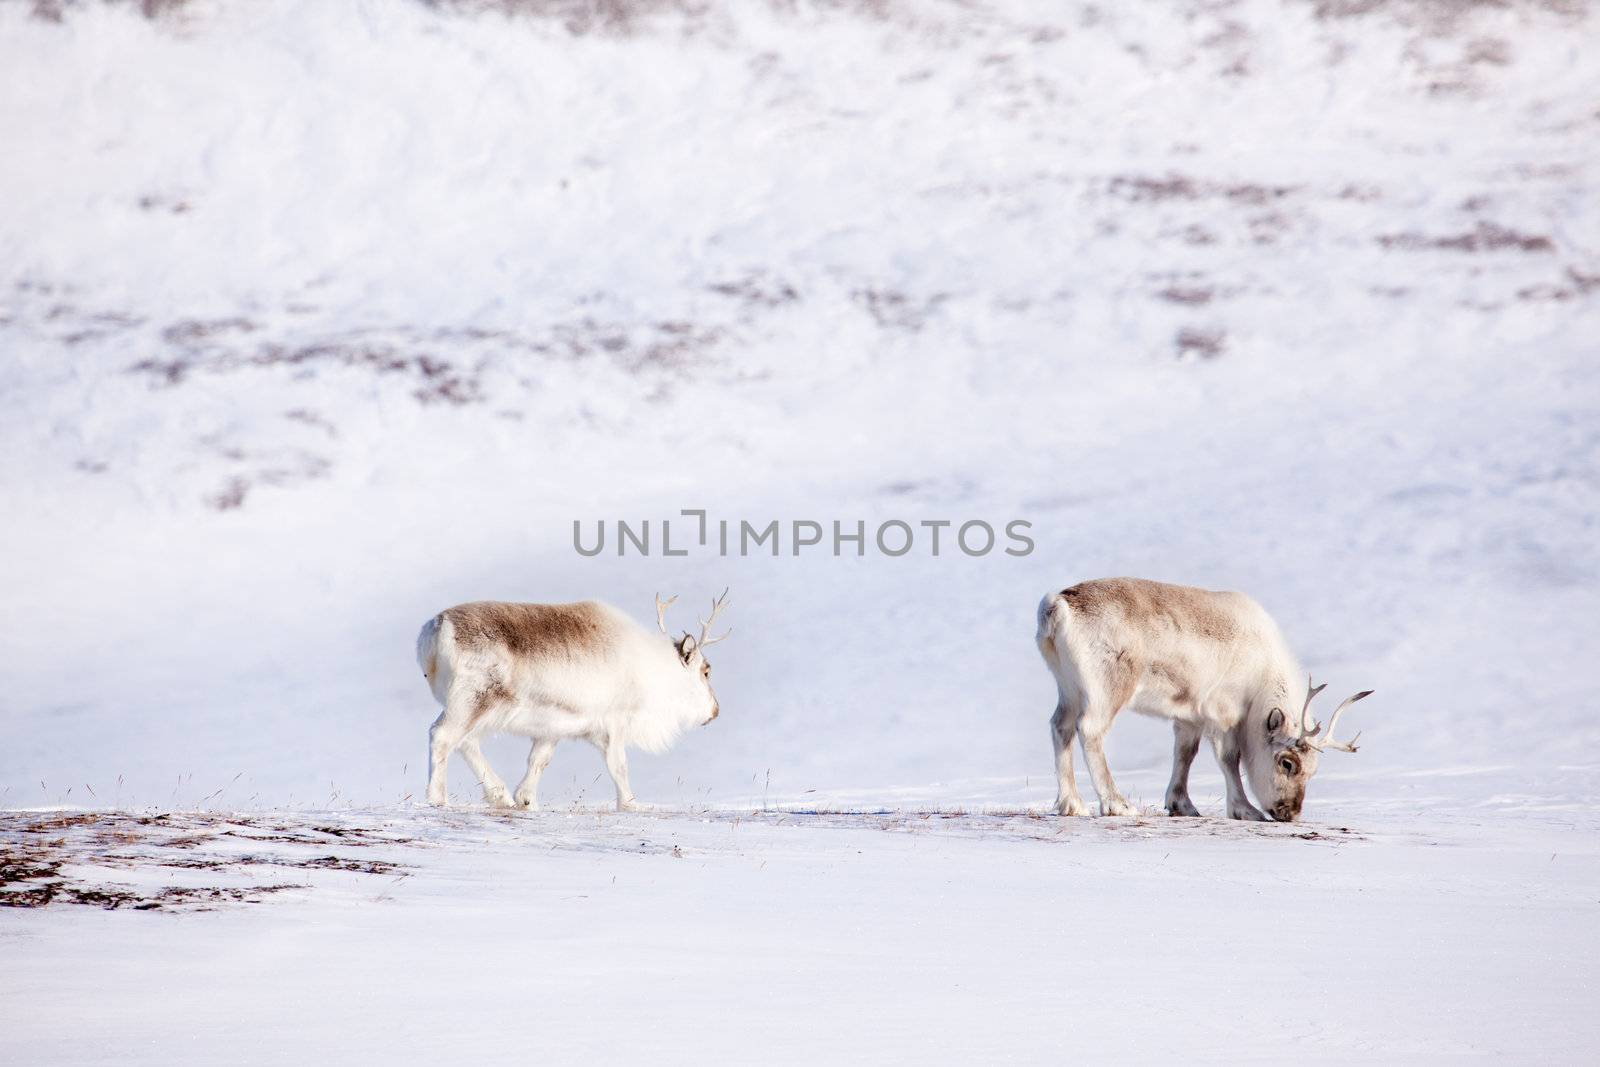 Two reindeer on the island of Spitsbergen, Svalbard, Norway